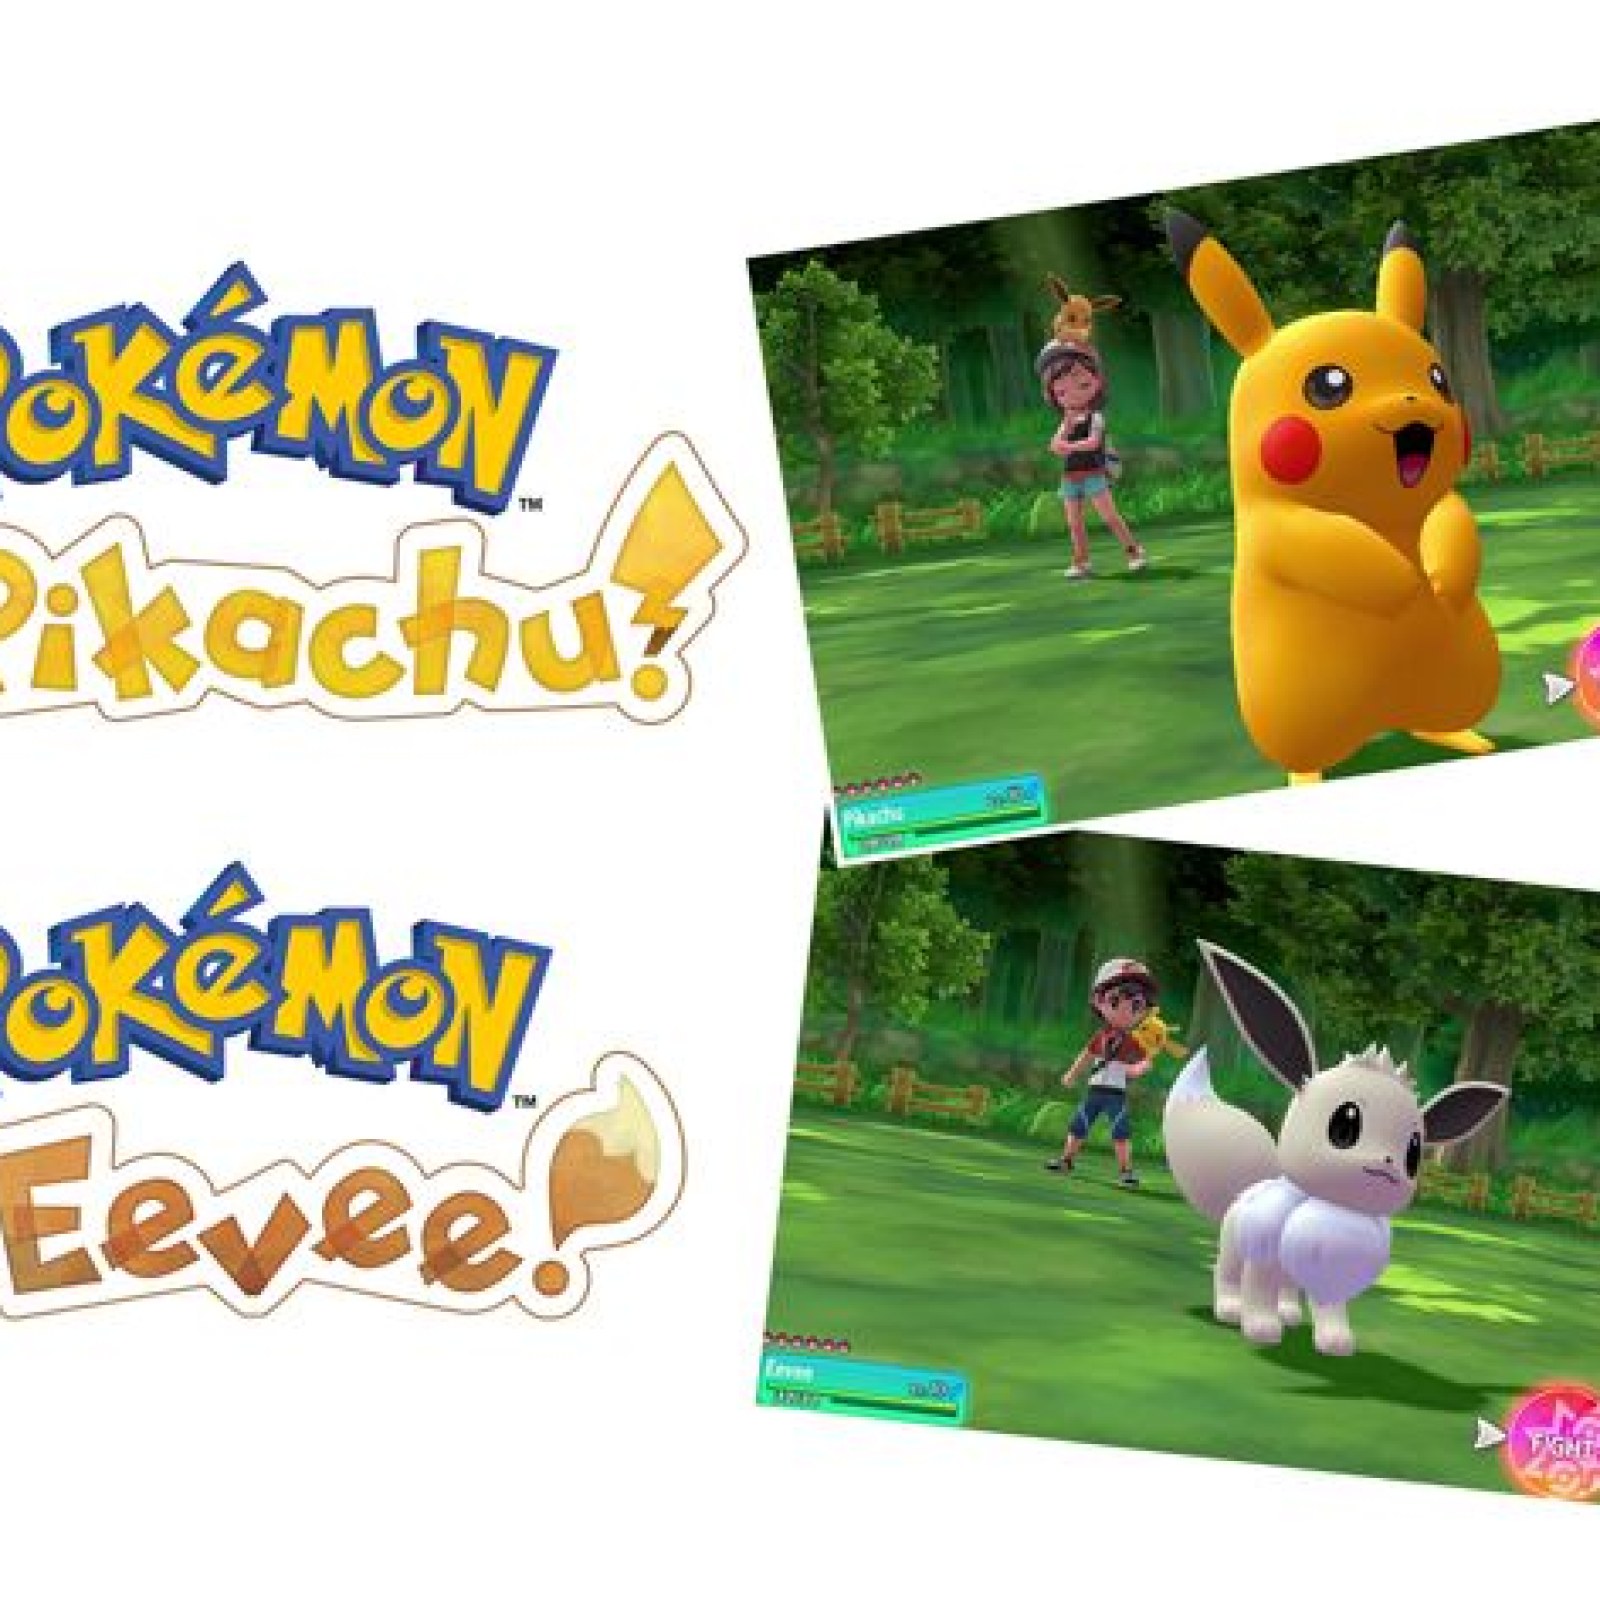 Shiny Eevee Pokemon Trade Go